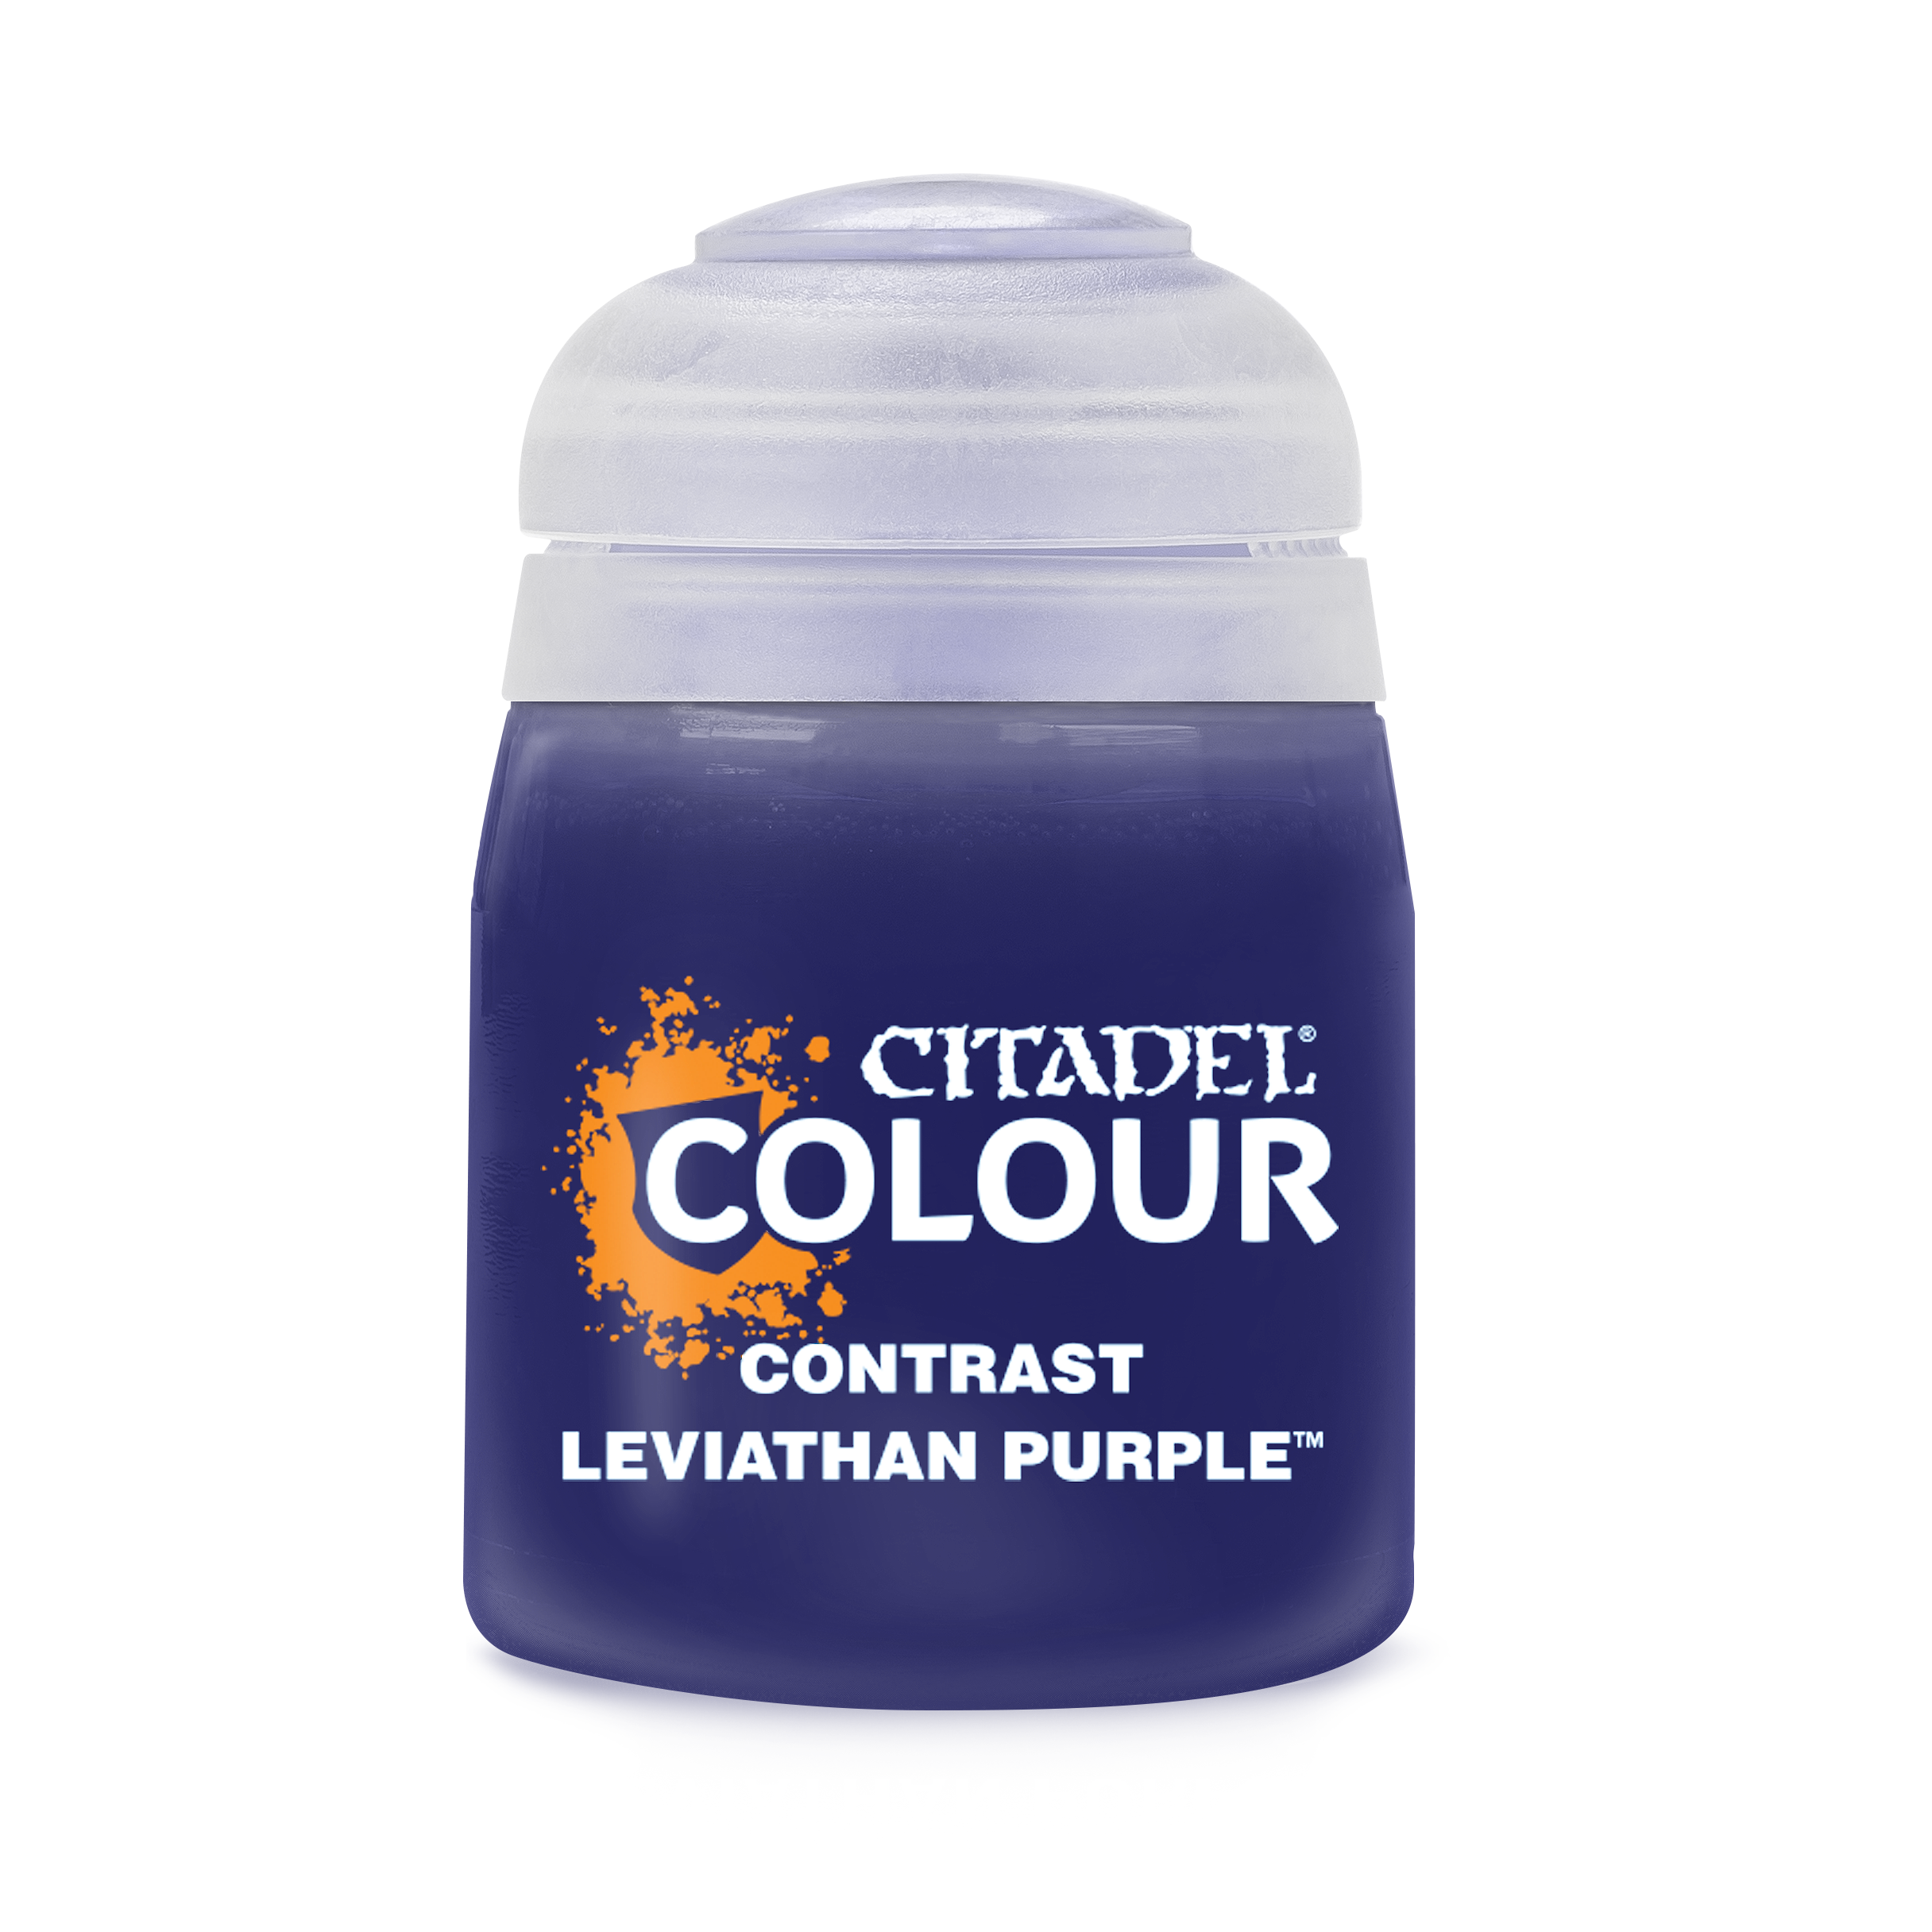 Contrast Leviathan Purple - Citadel Colour